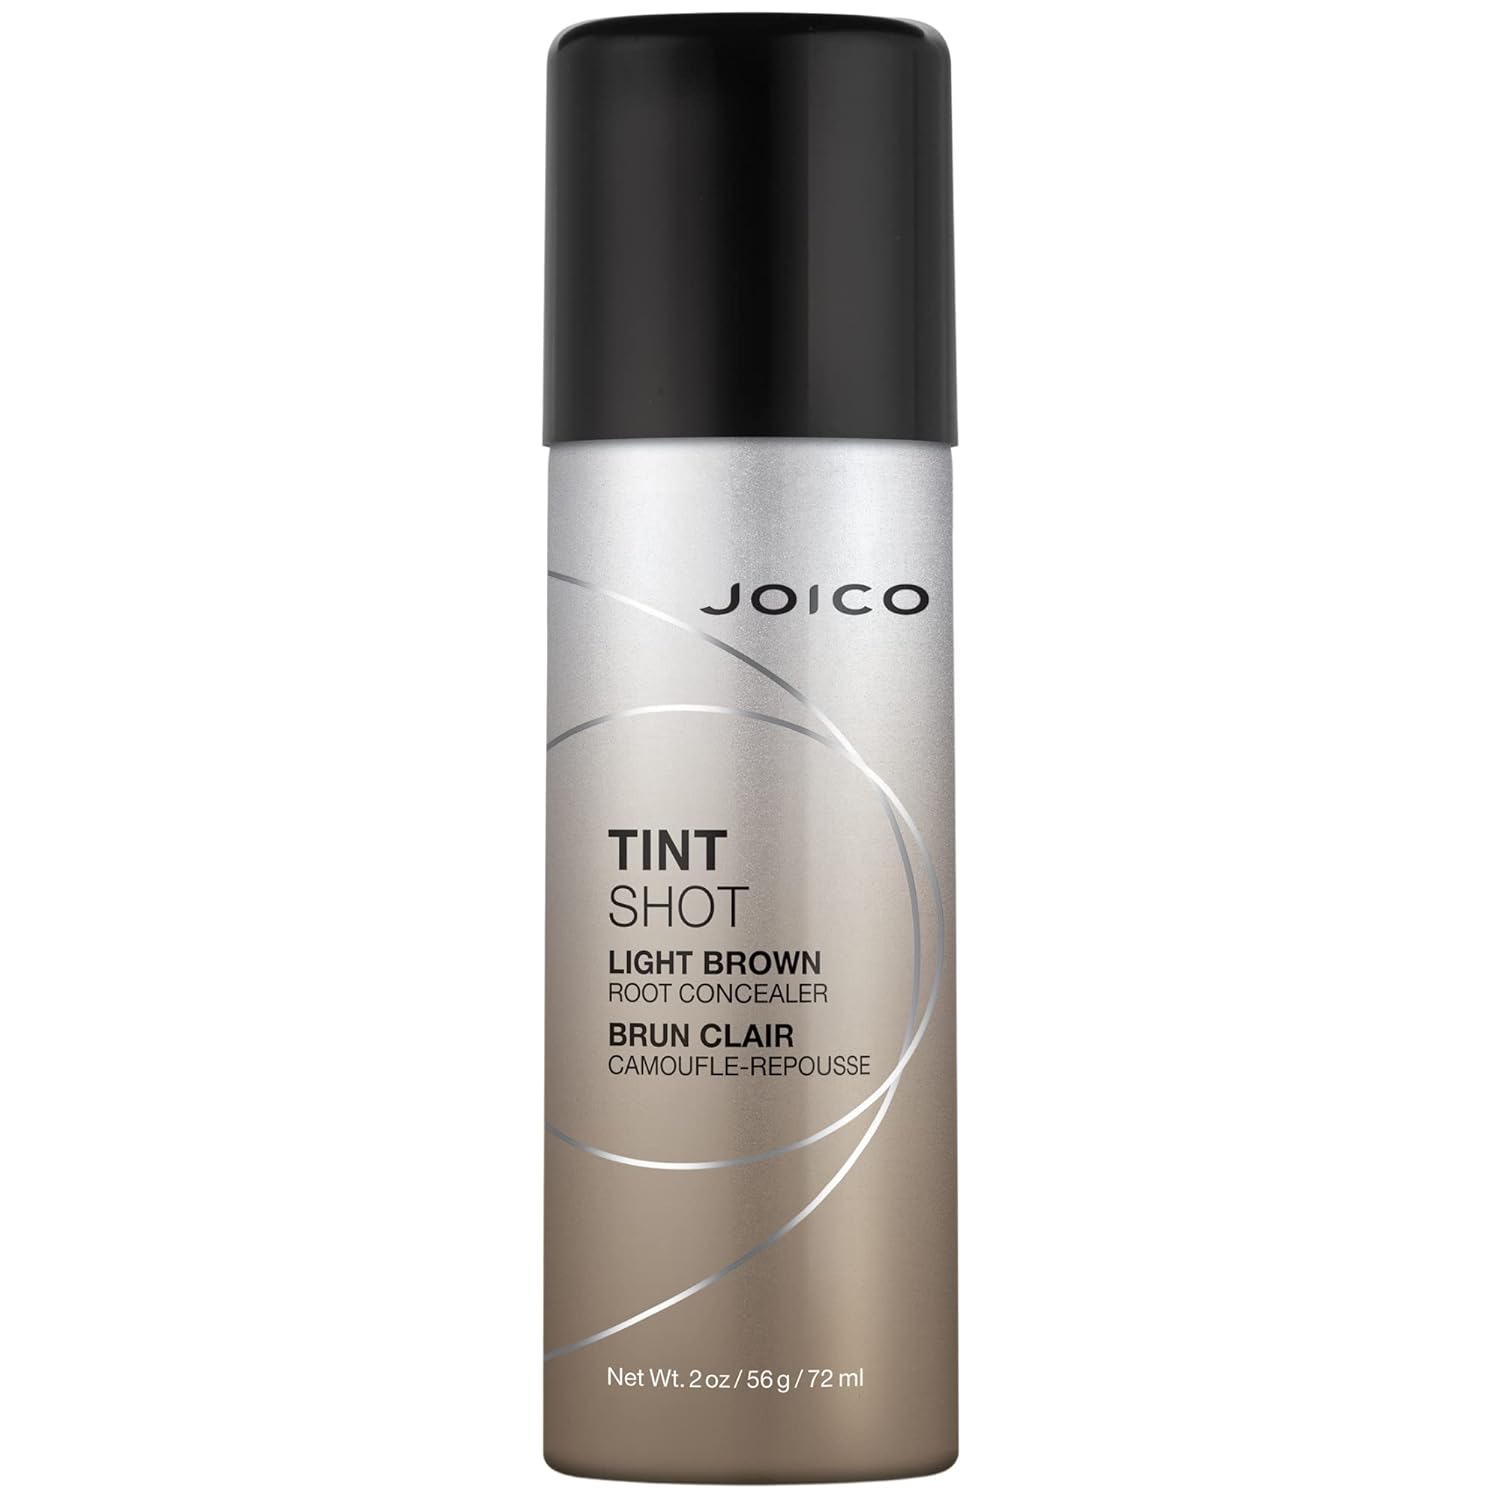 Joico Light Brown Tint Shot Root Concealer